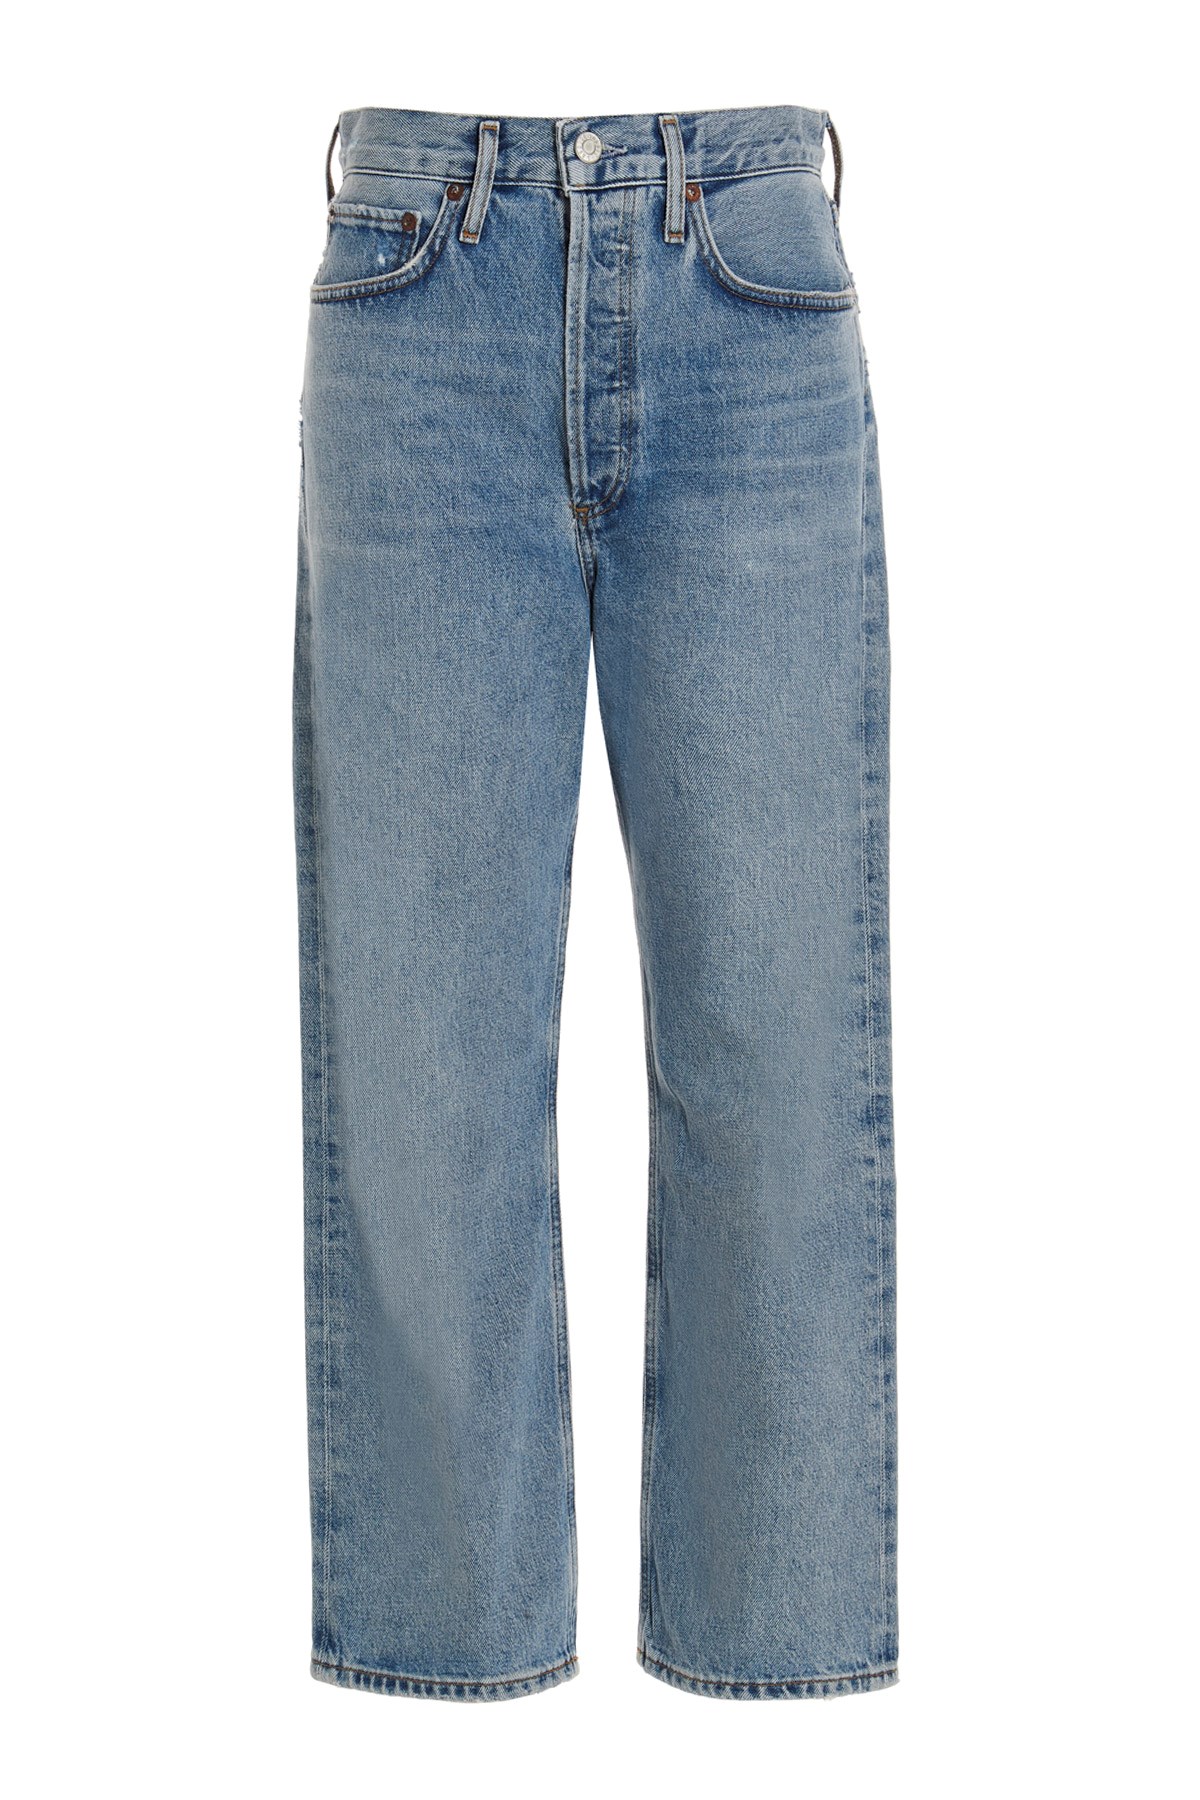 AGOLDE '90S Crop’ Jeans